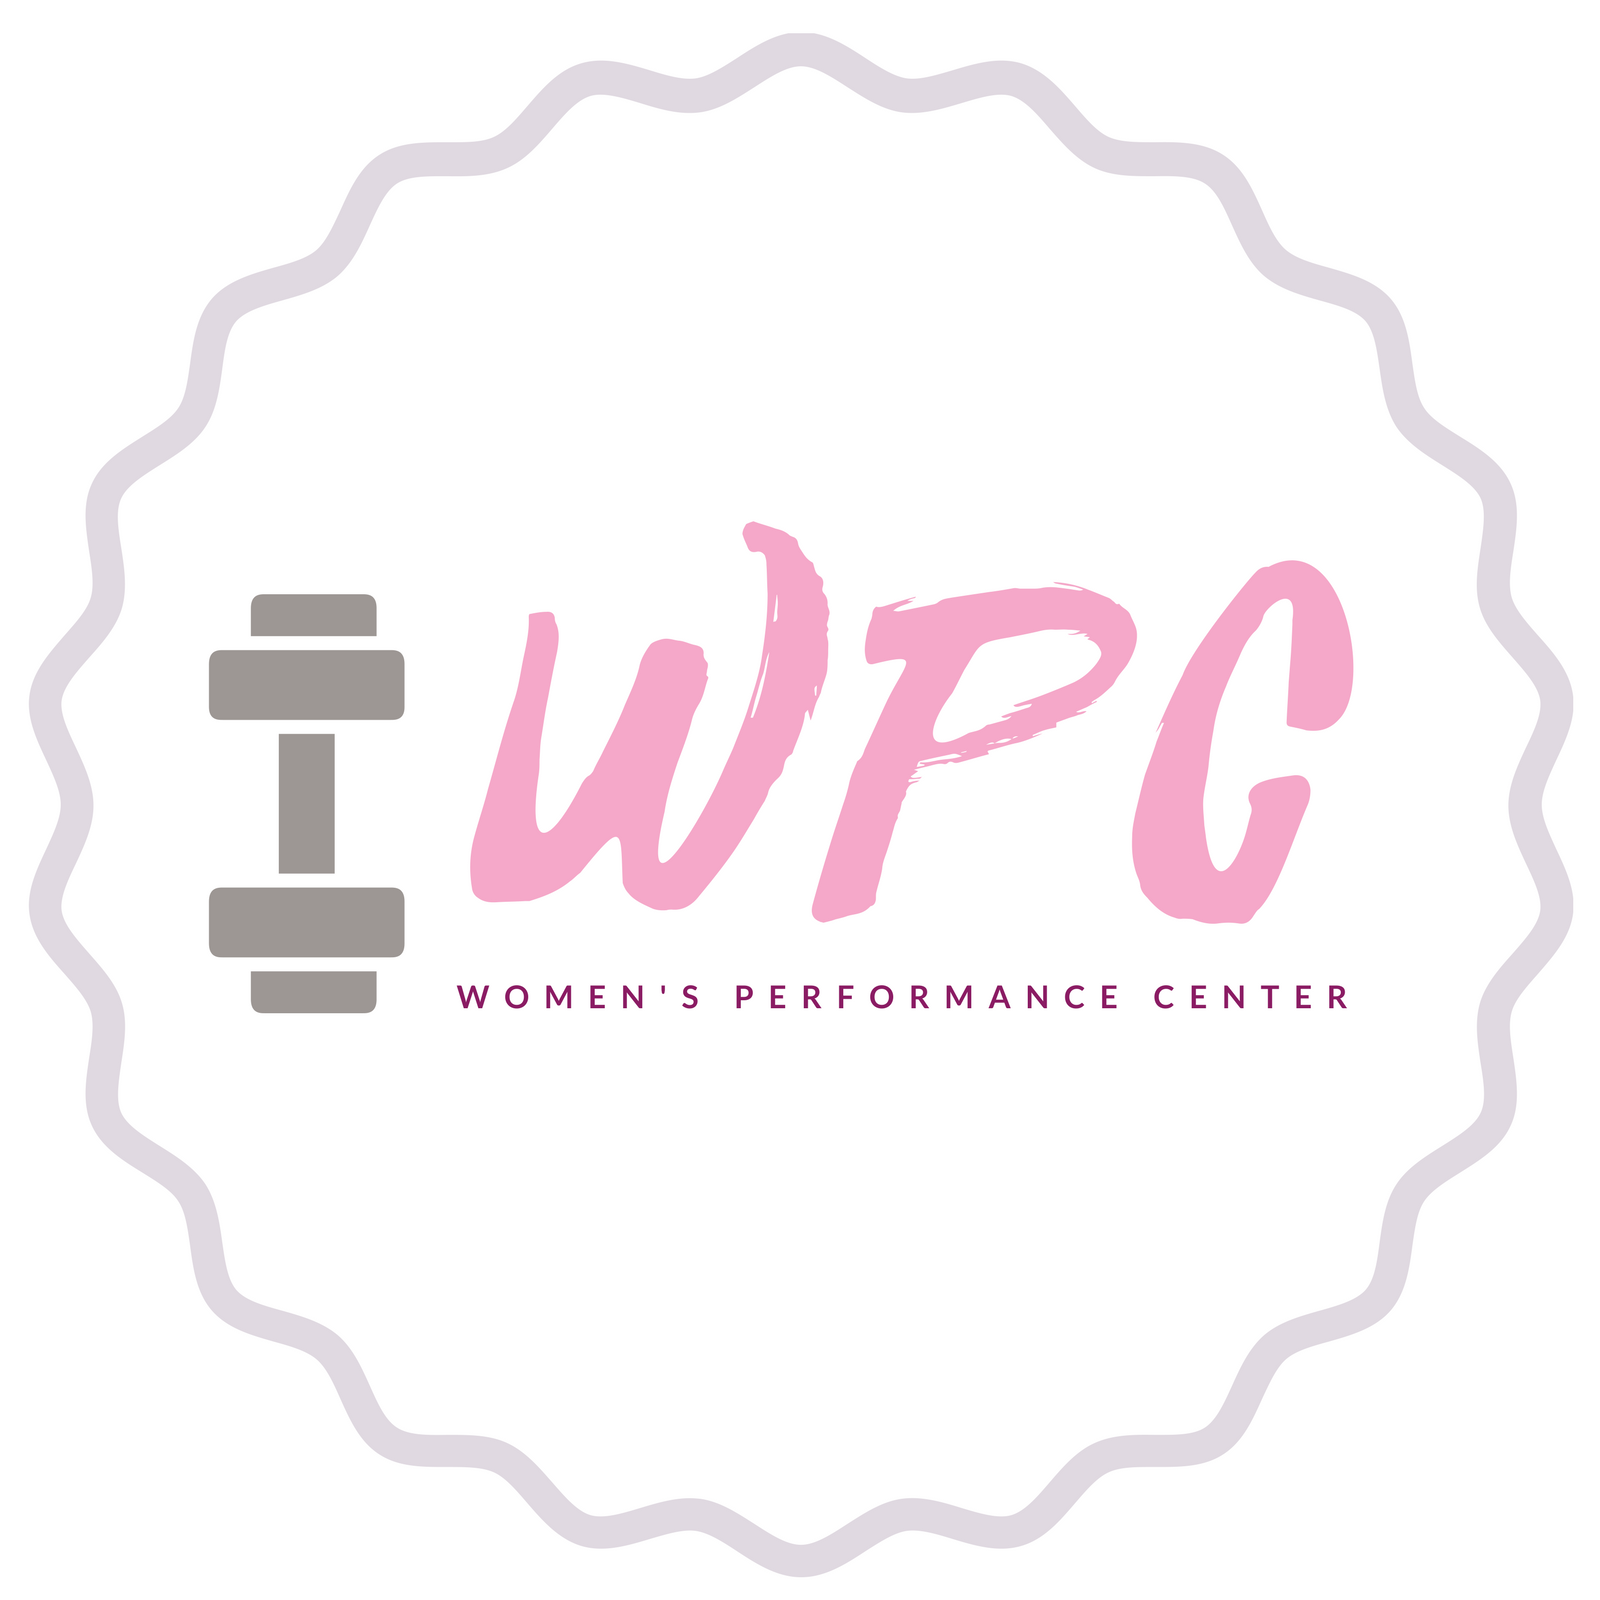 Women's Performance Center